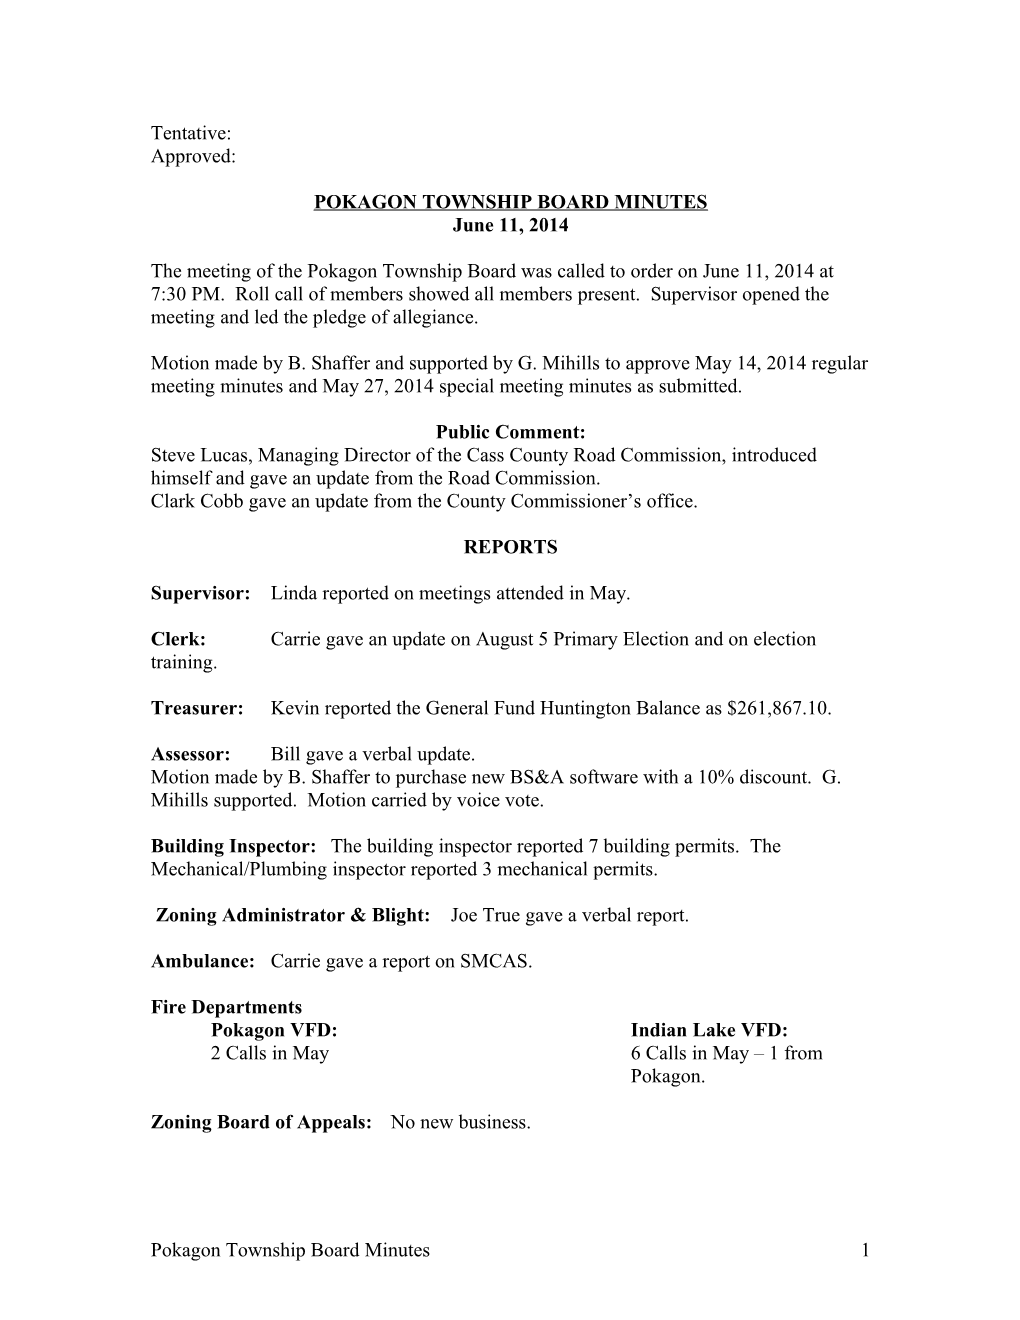 Pokagon Township Board Minutes